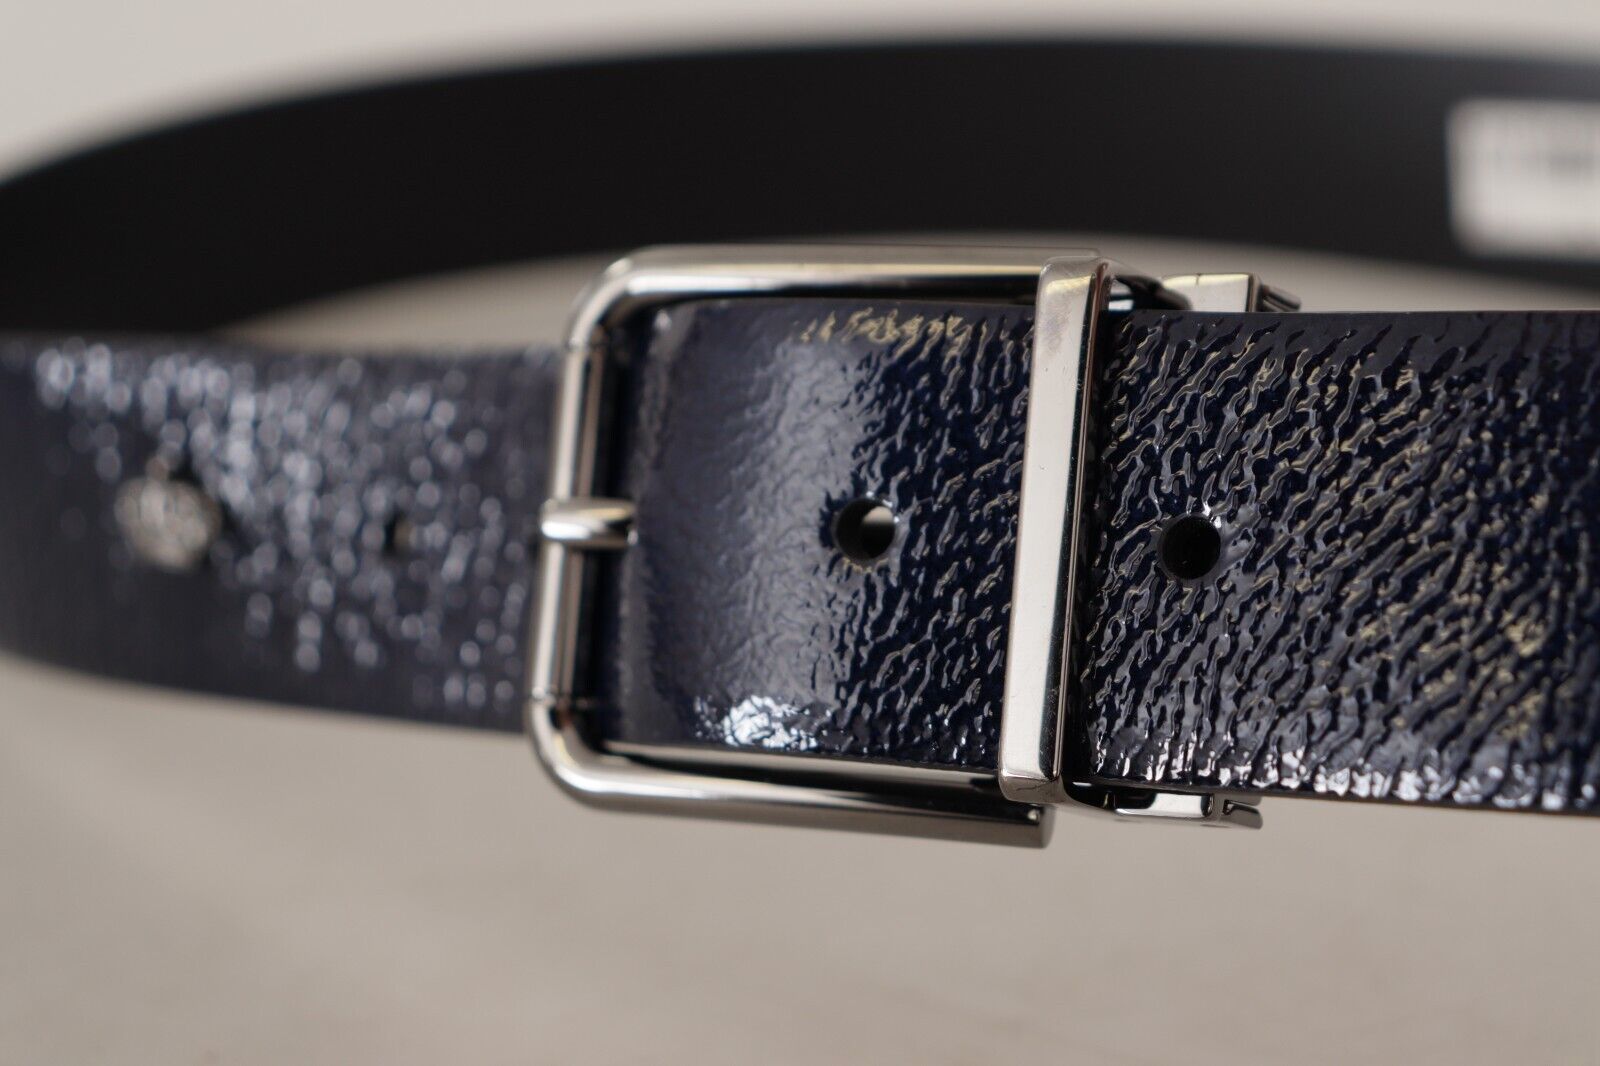 Dolce & Gabbana Elegant Blue Leather Belt with Silver Buckle | Fashionsarah.com